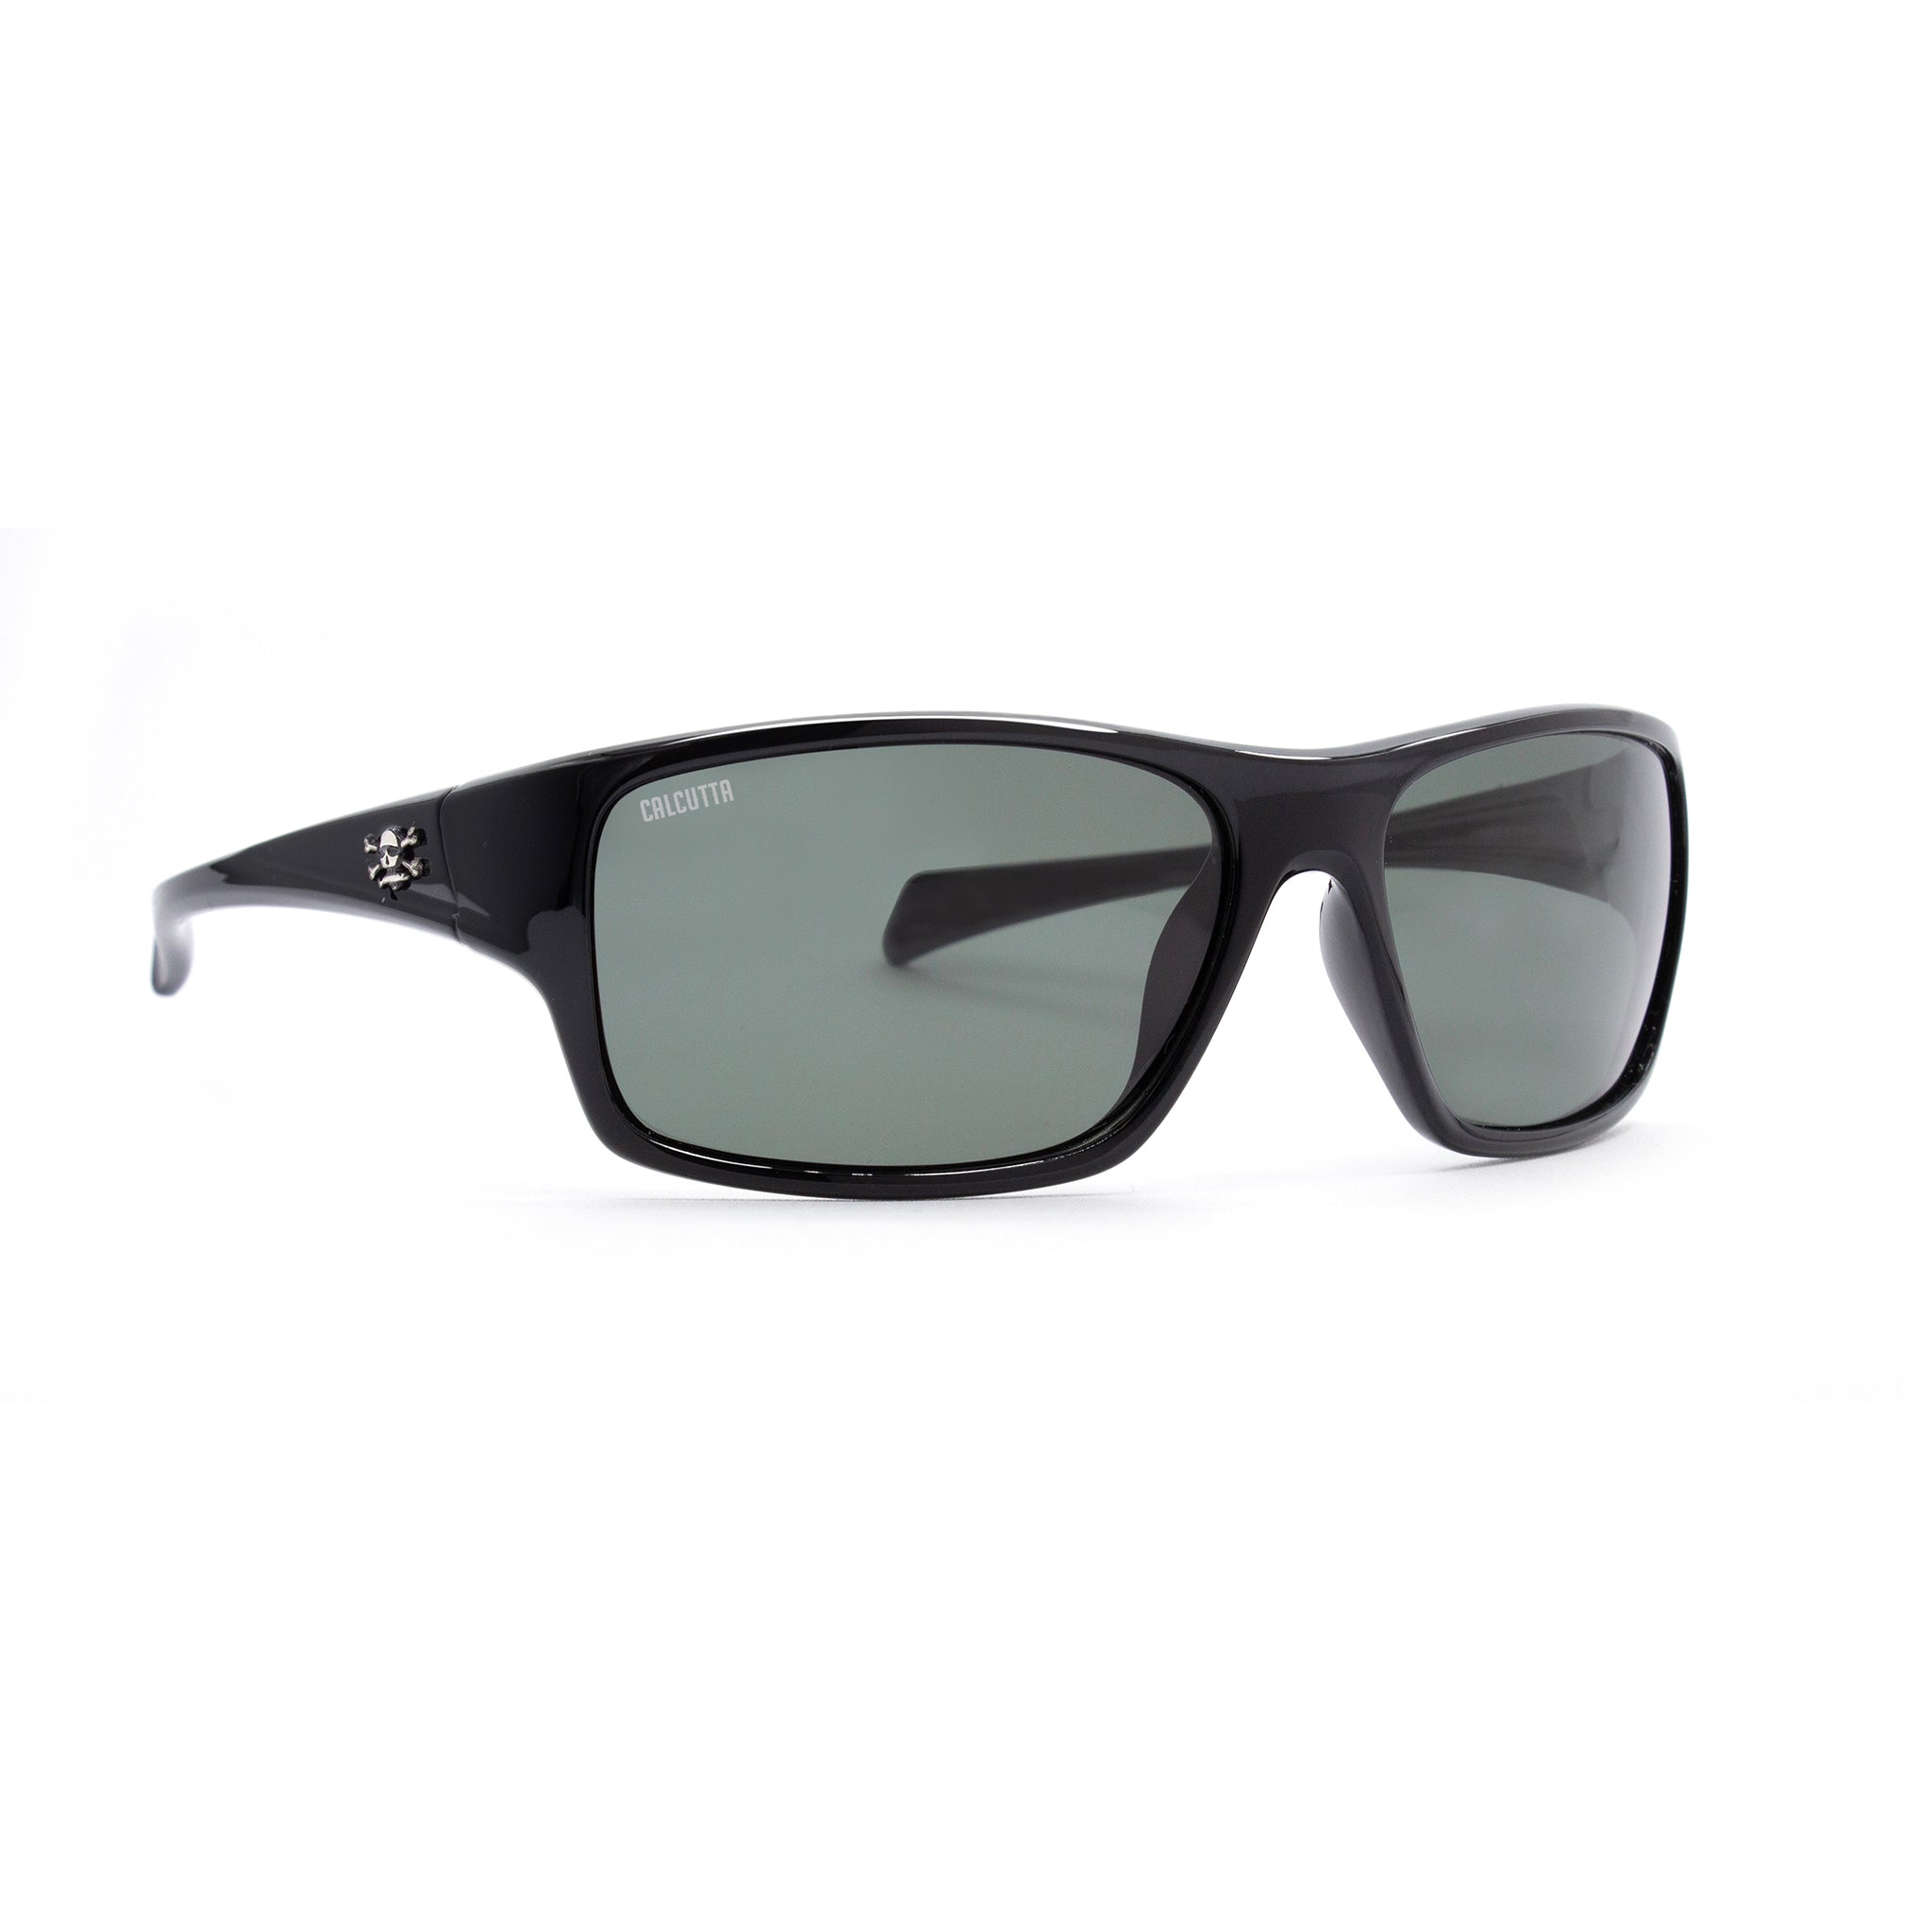 Calcutta Chesapeake sunglasses gray lens